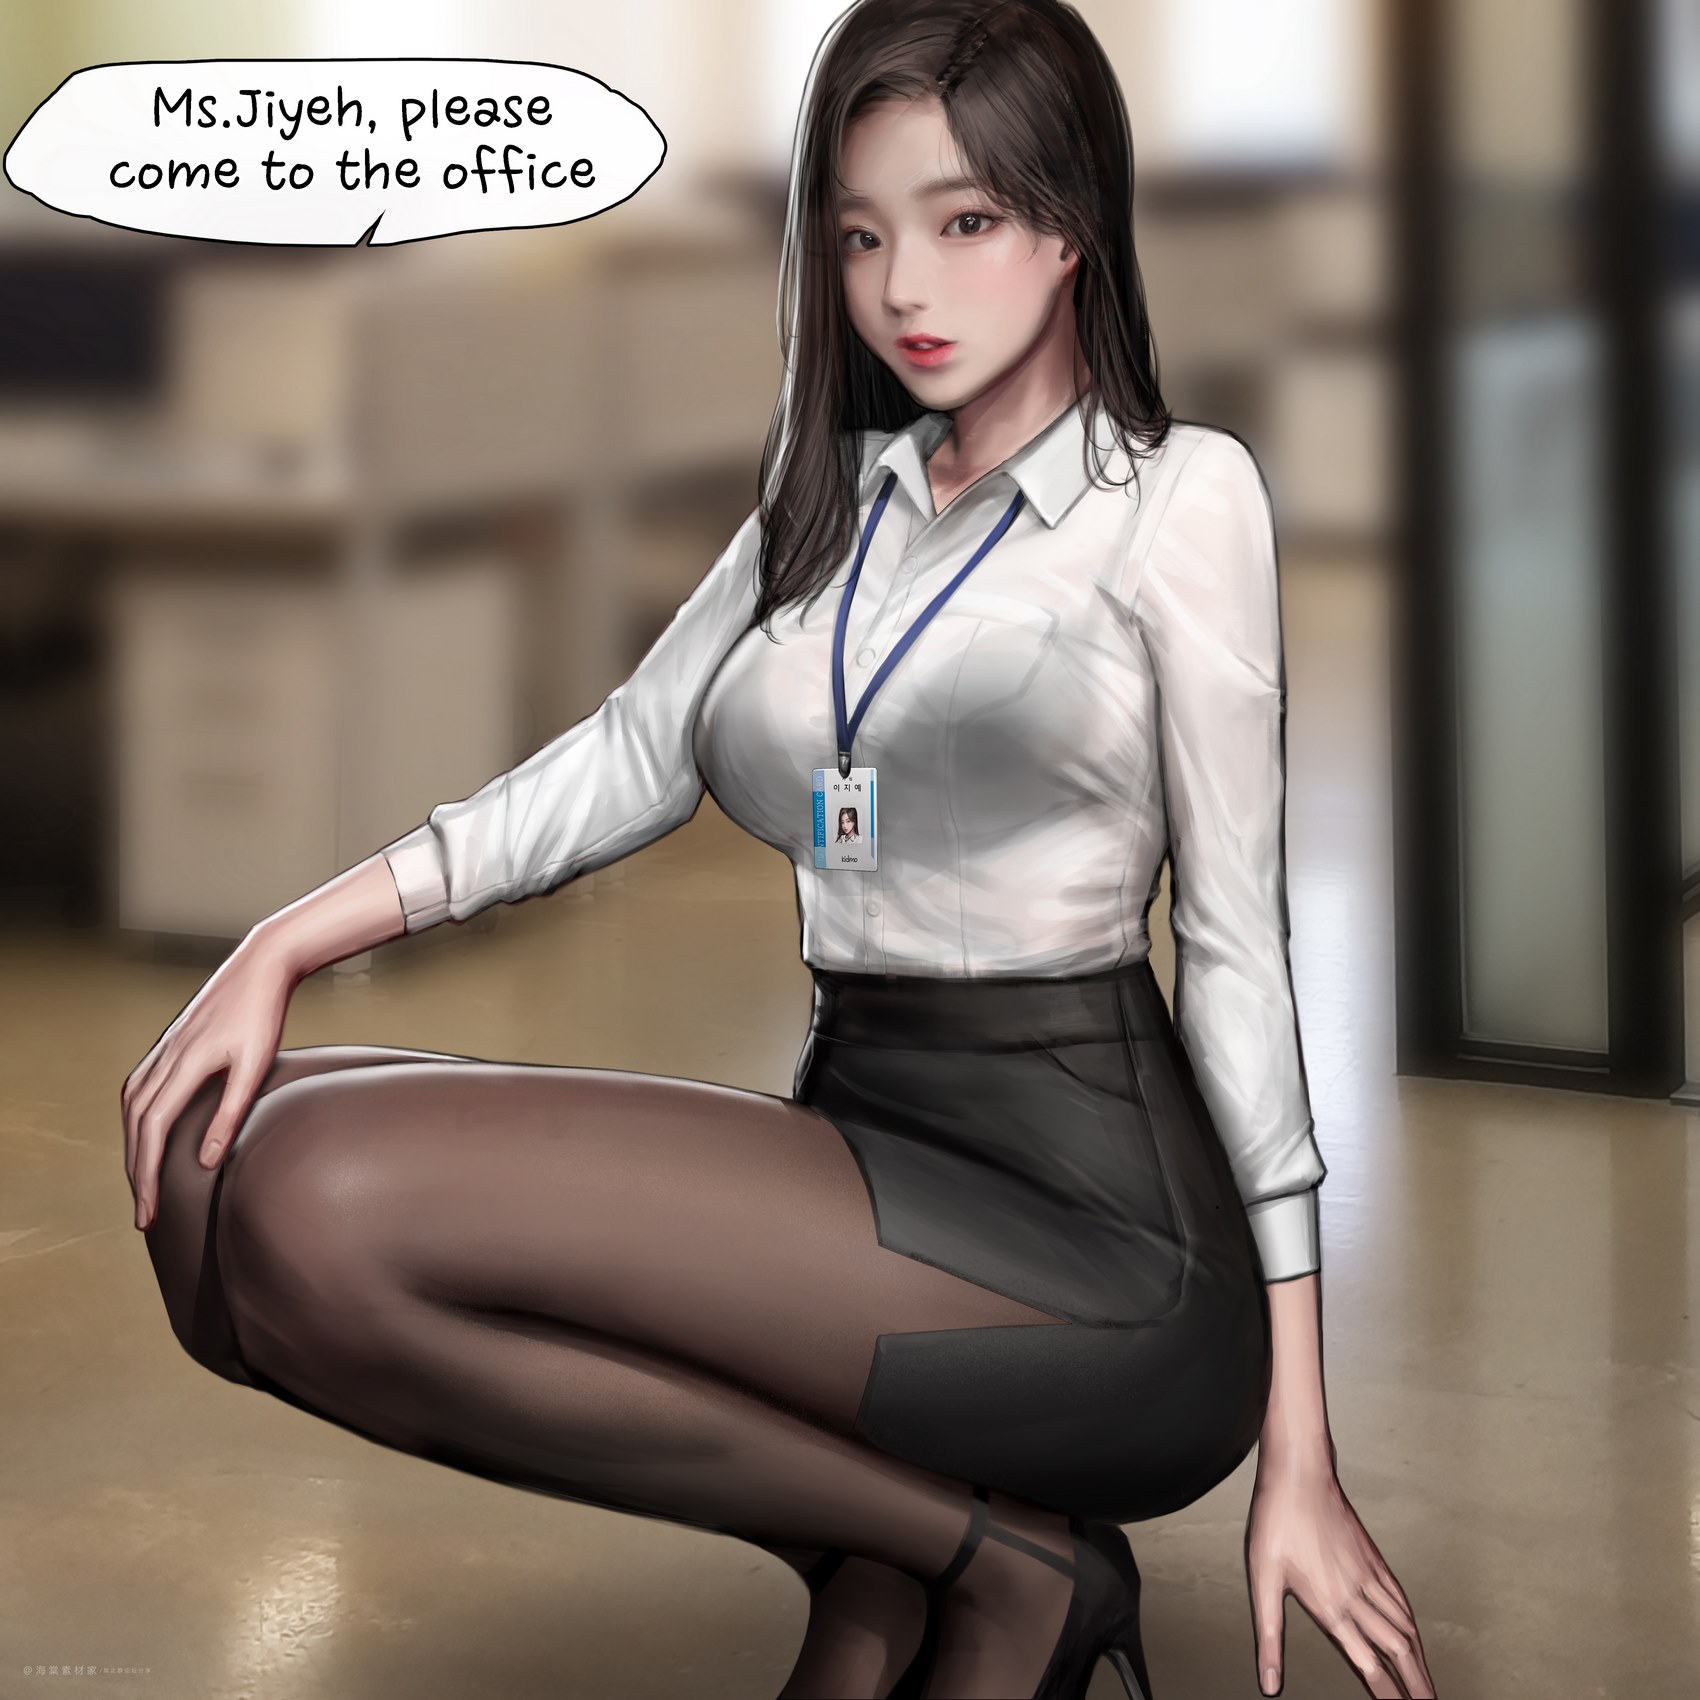 Animated Secretary Porn - Kidmo] - Corporate Secretary | Porn Comics